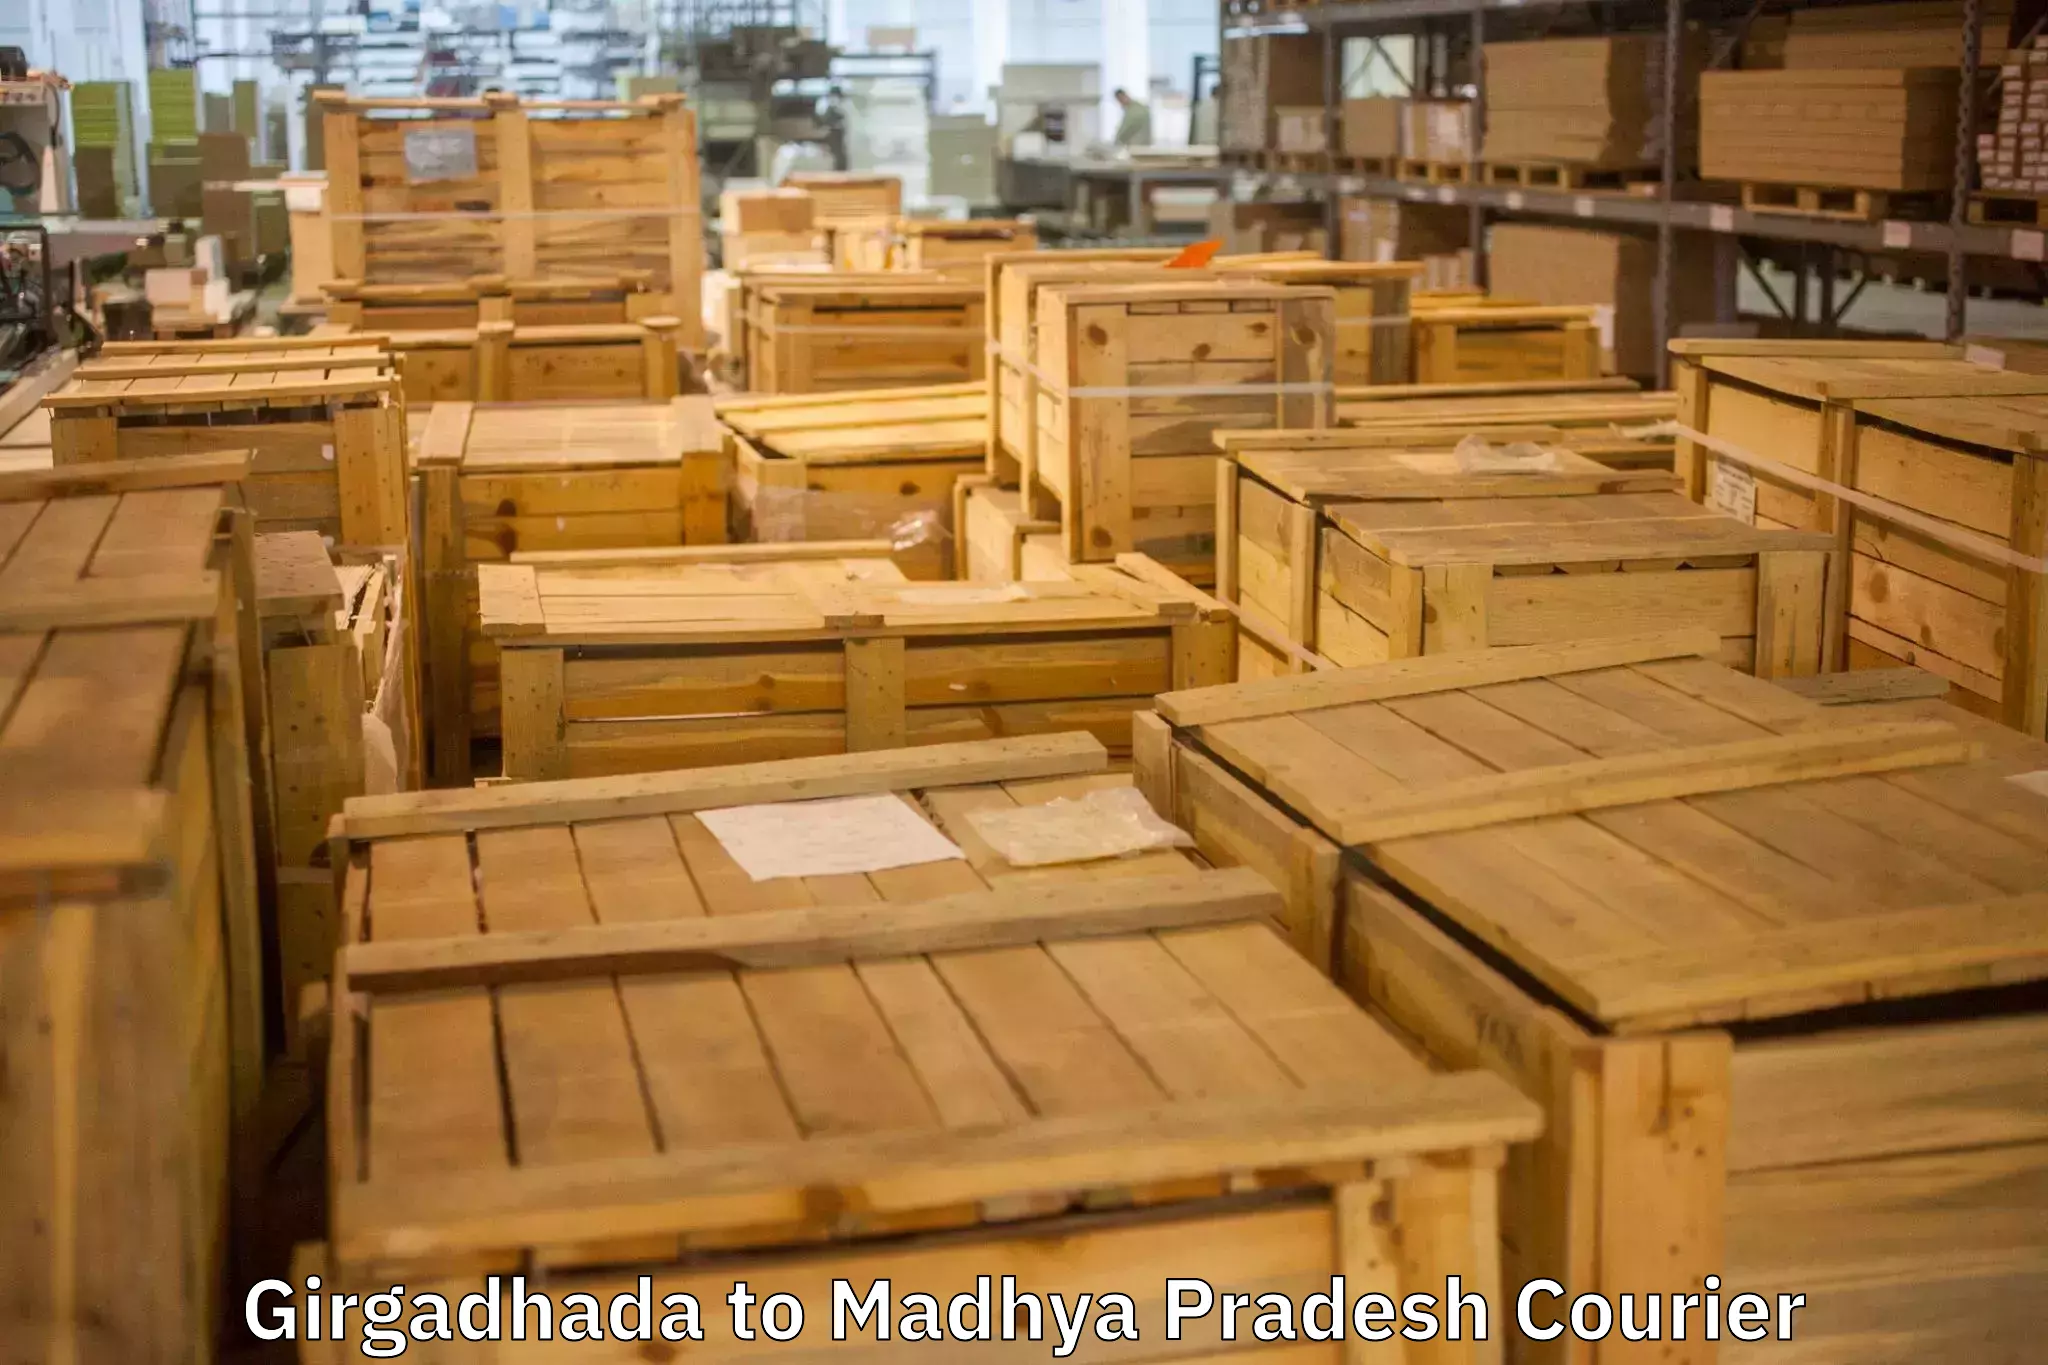 Home shifting experts Girgadhada to Madhya Pradesh